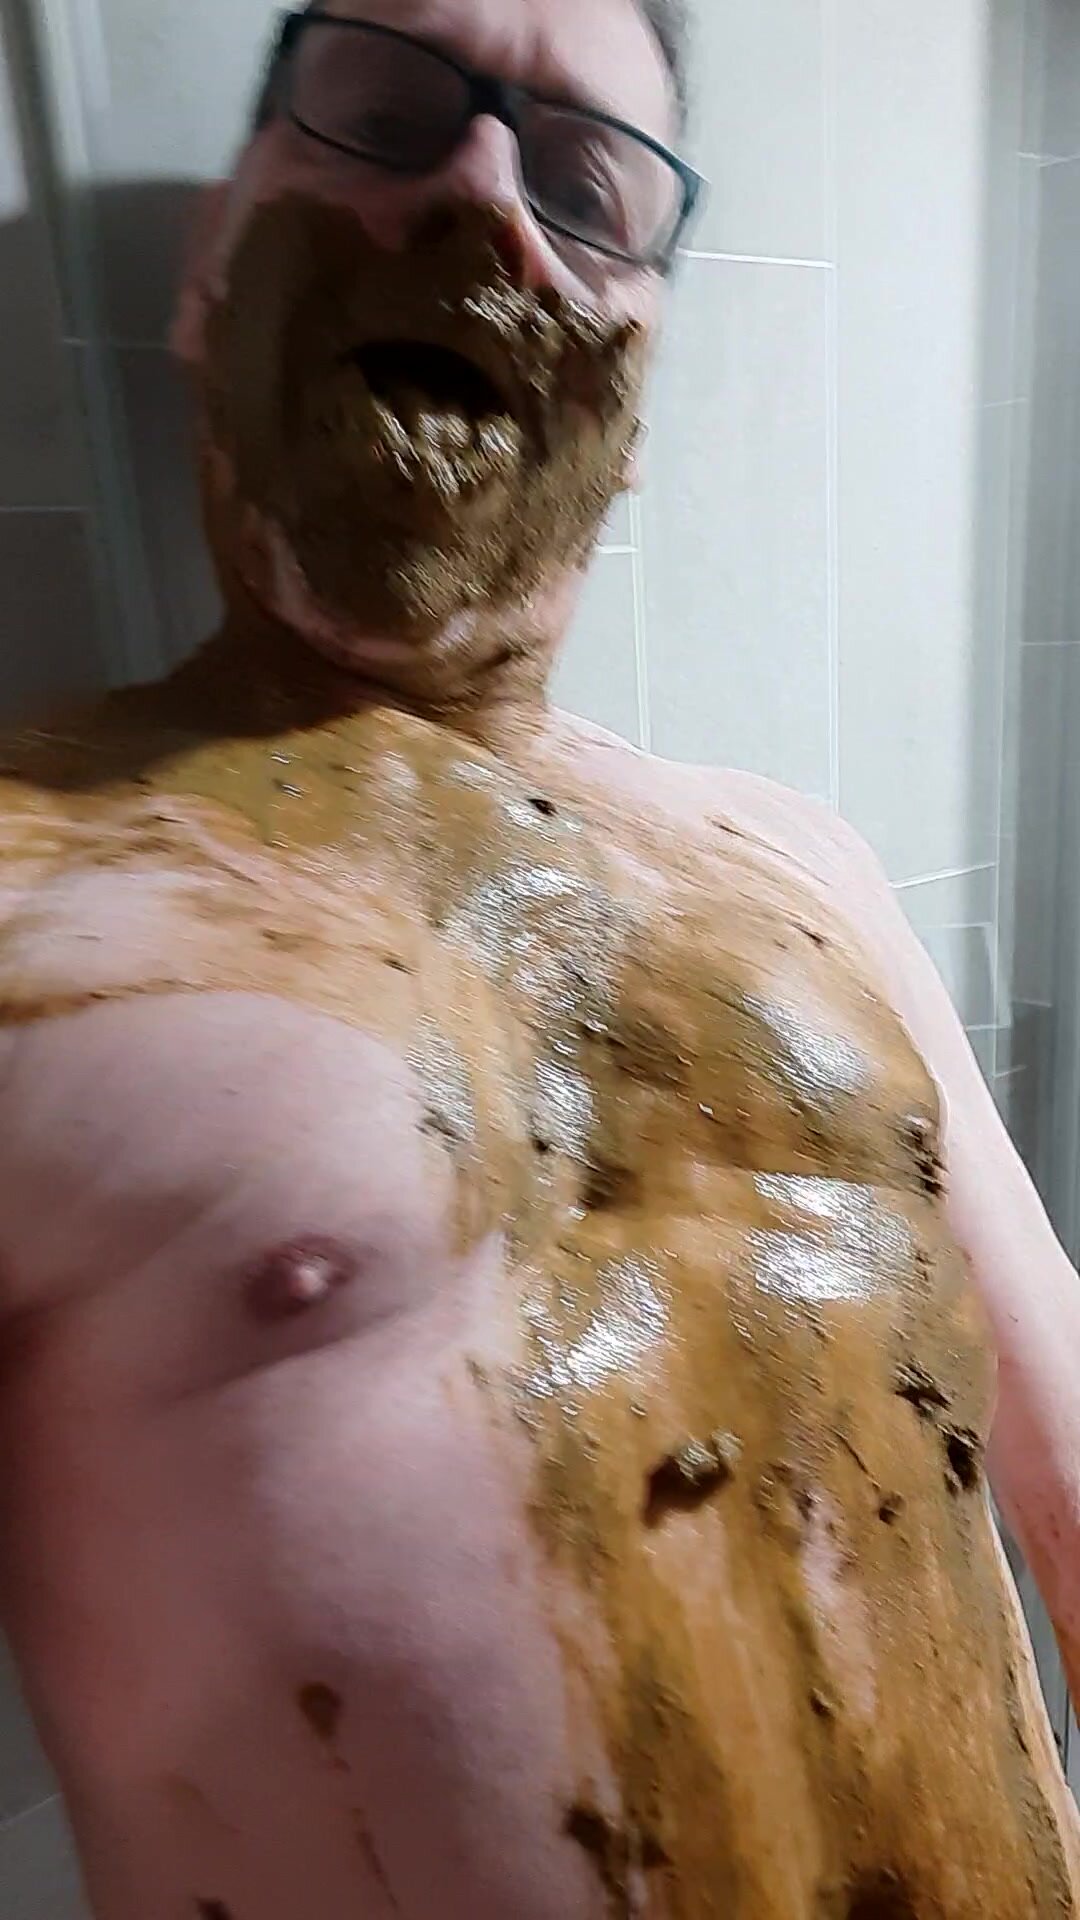 Hot scat chewer in shower